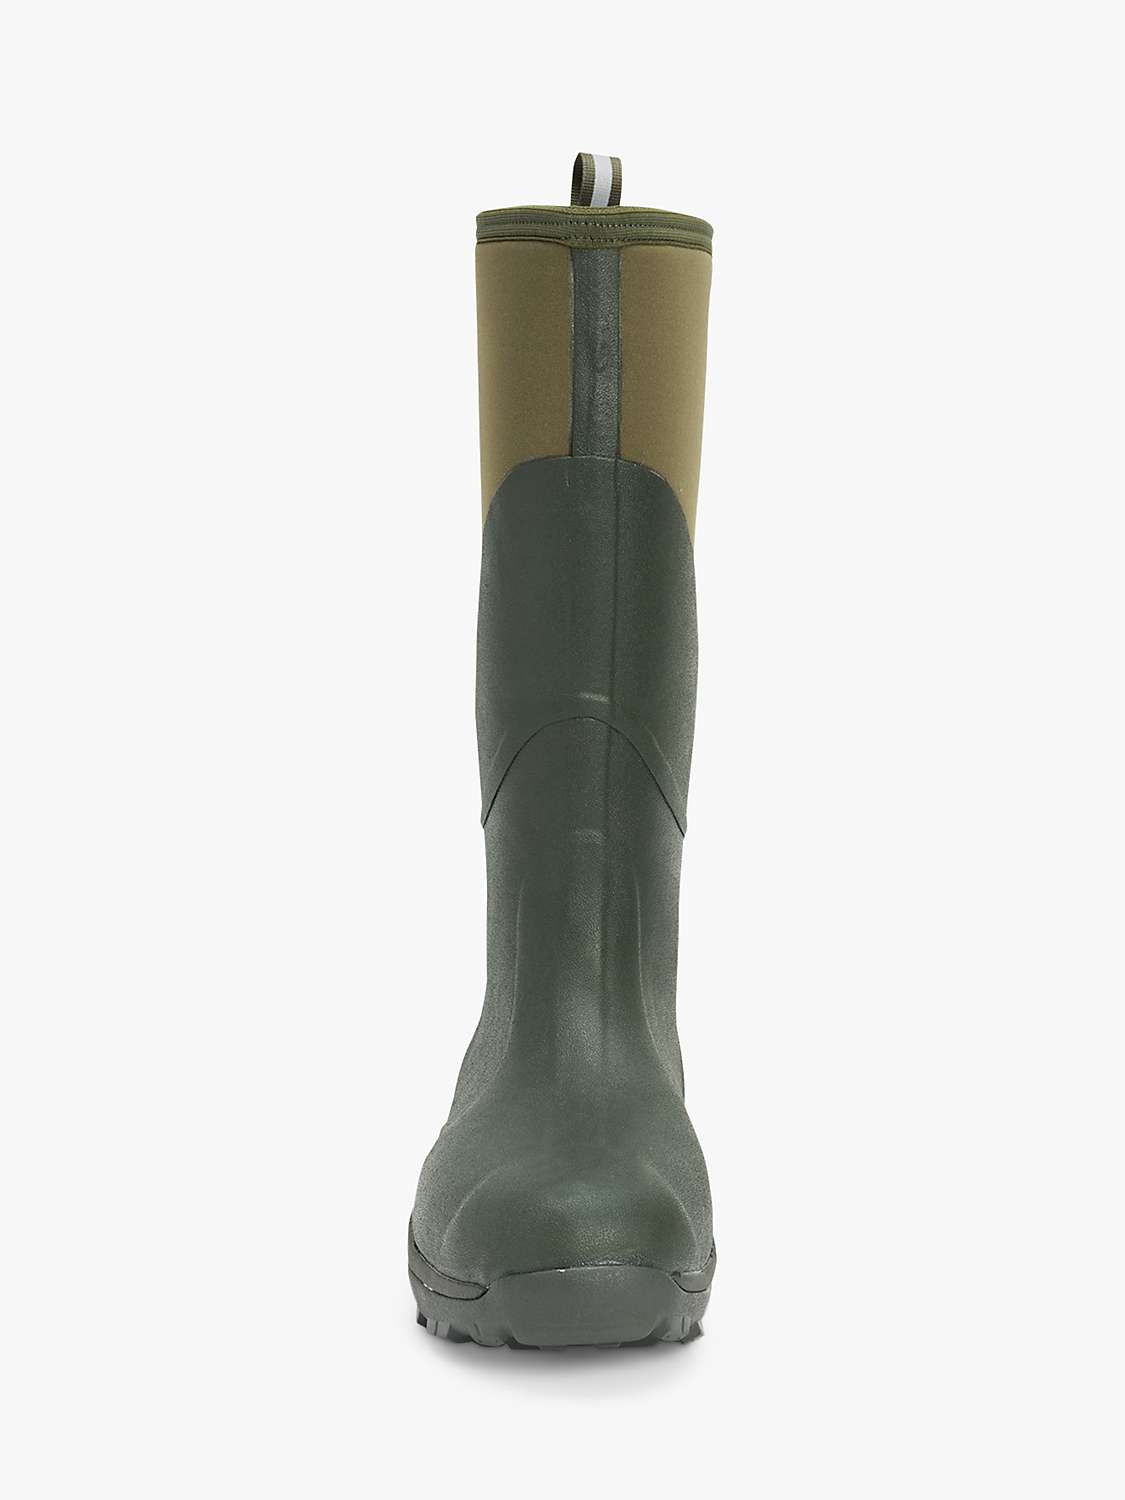 Buy Muck Muckmaster Tall Wellington Boots Online at johnlewis.com